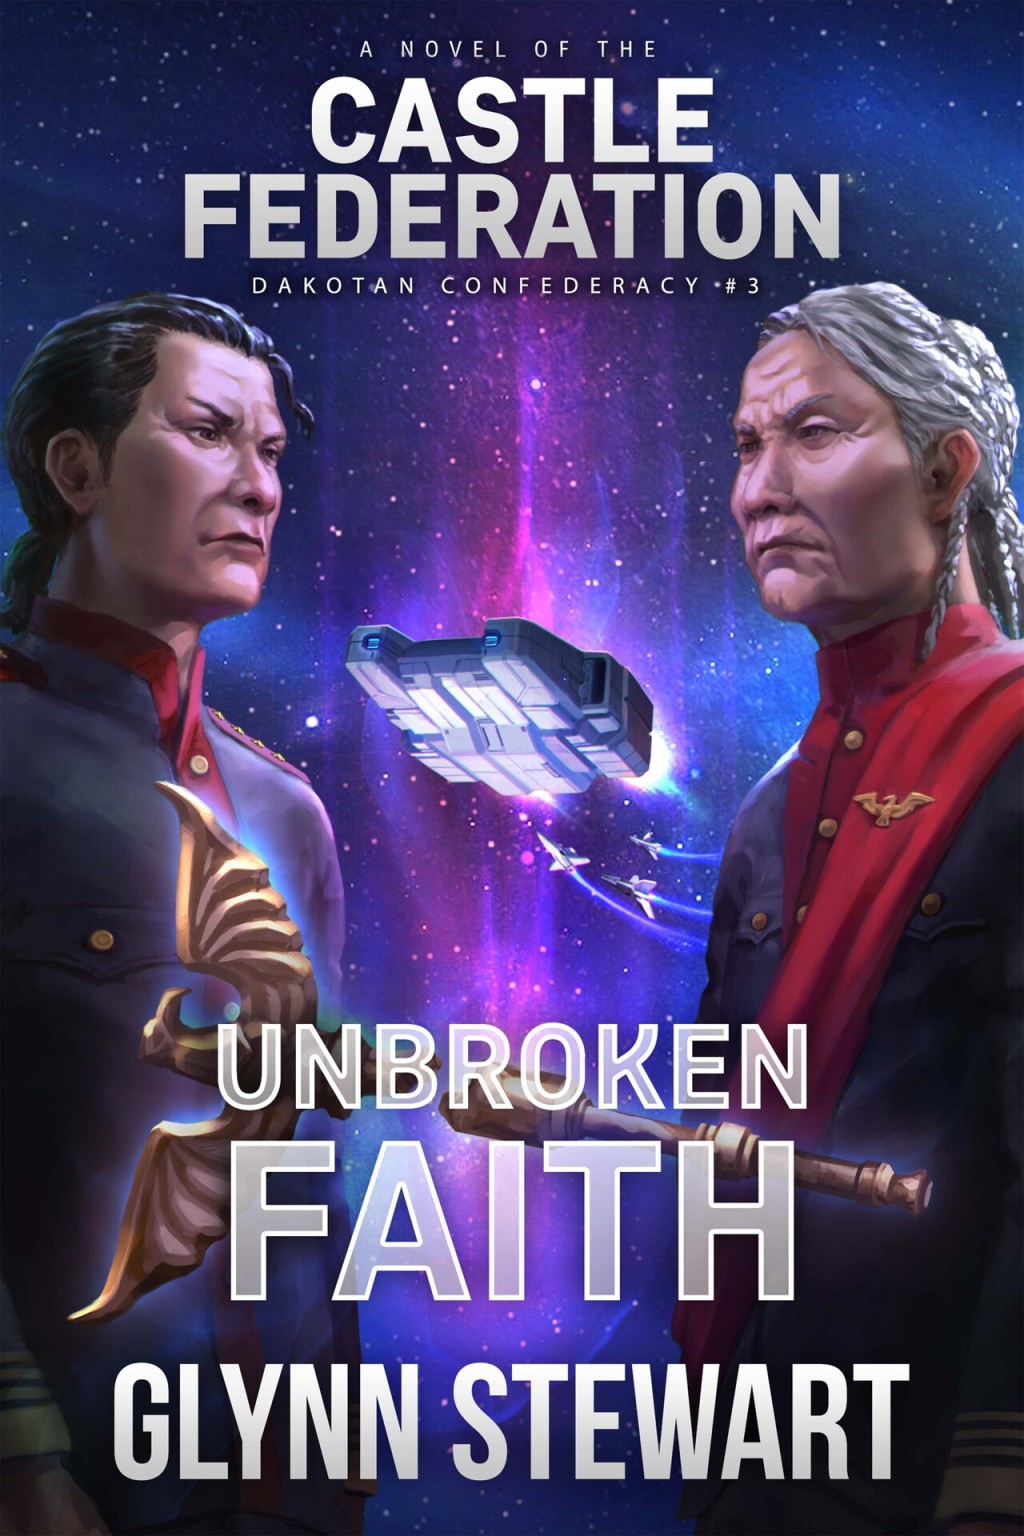 Unbroken Faith – Okay but not as good as the previous book in the series.